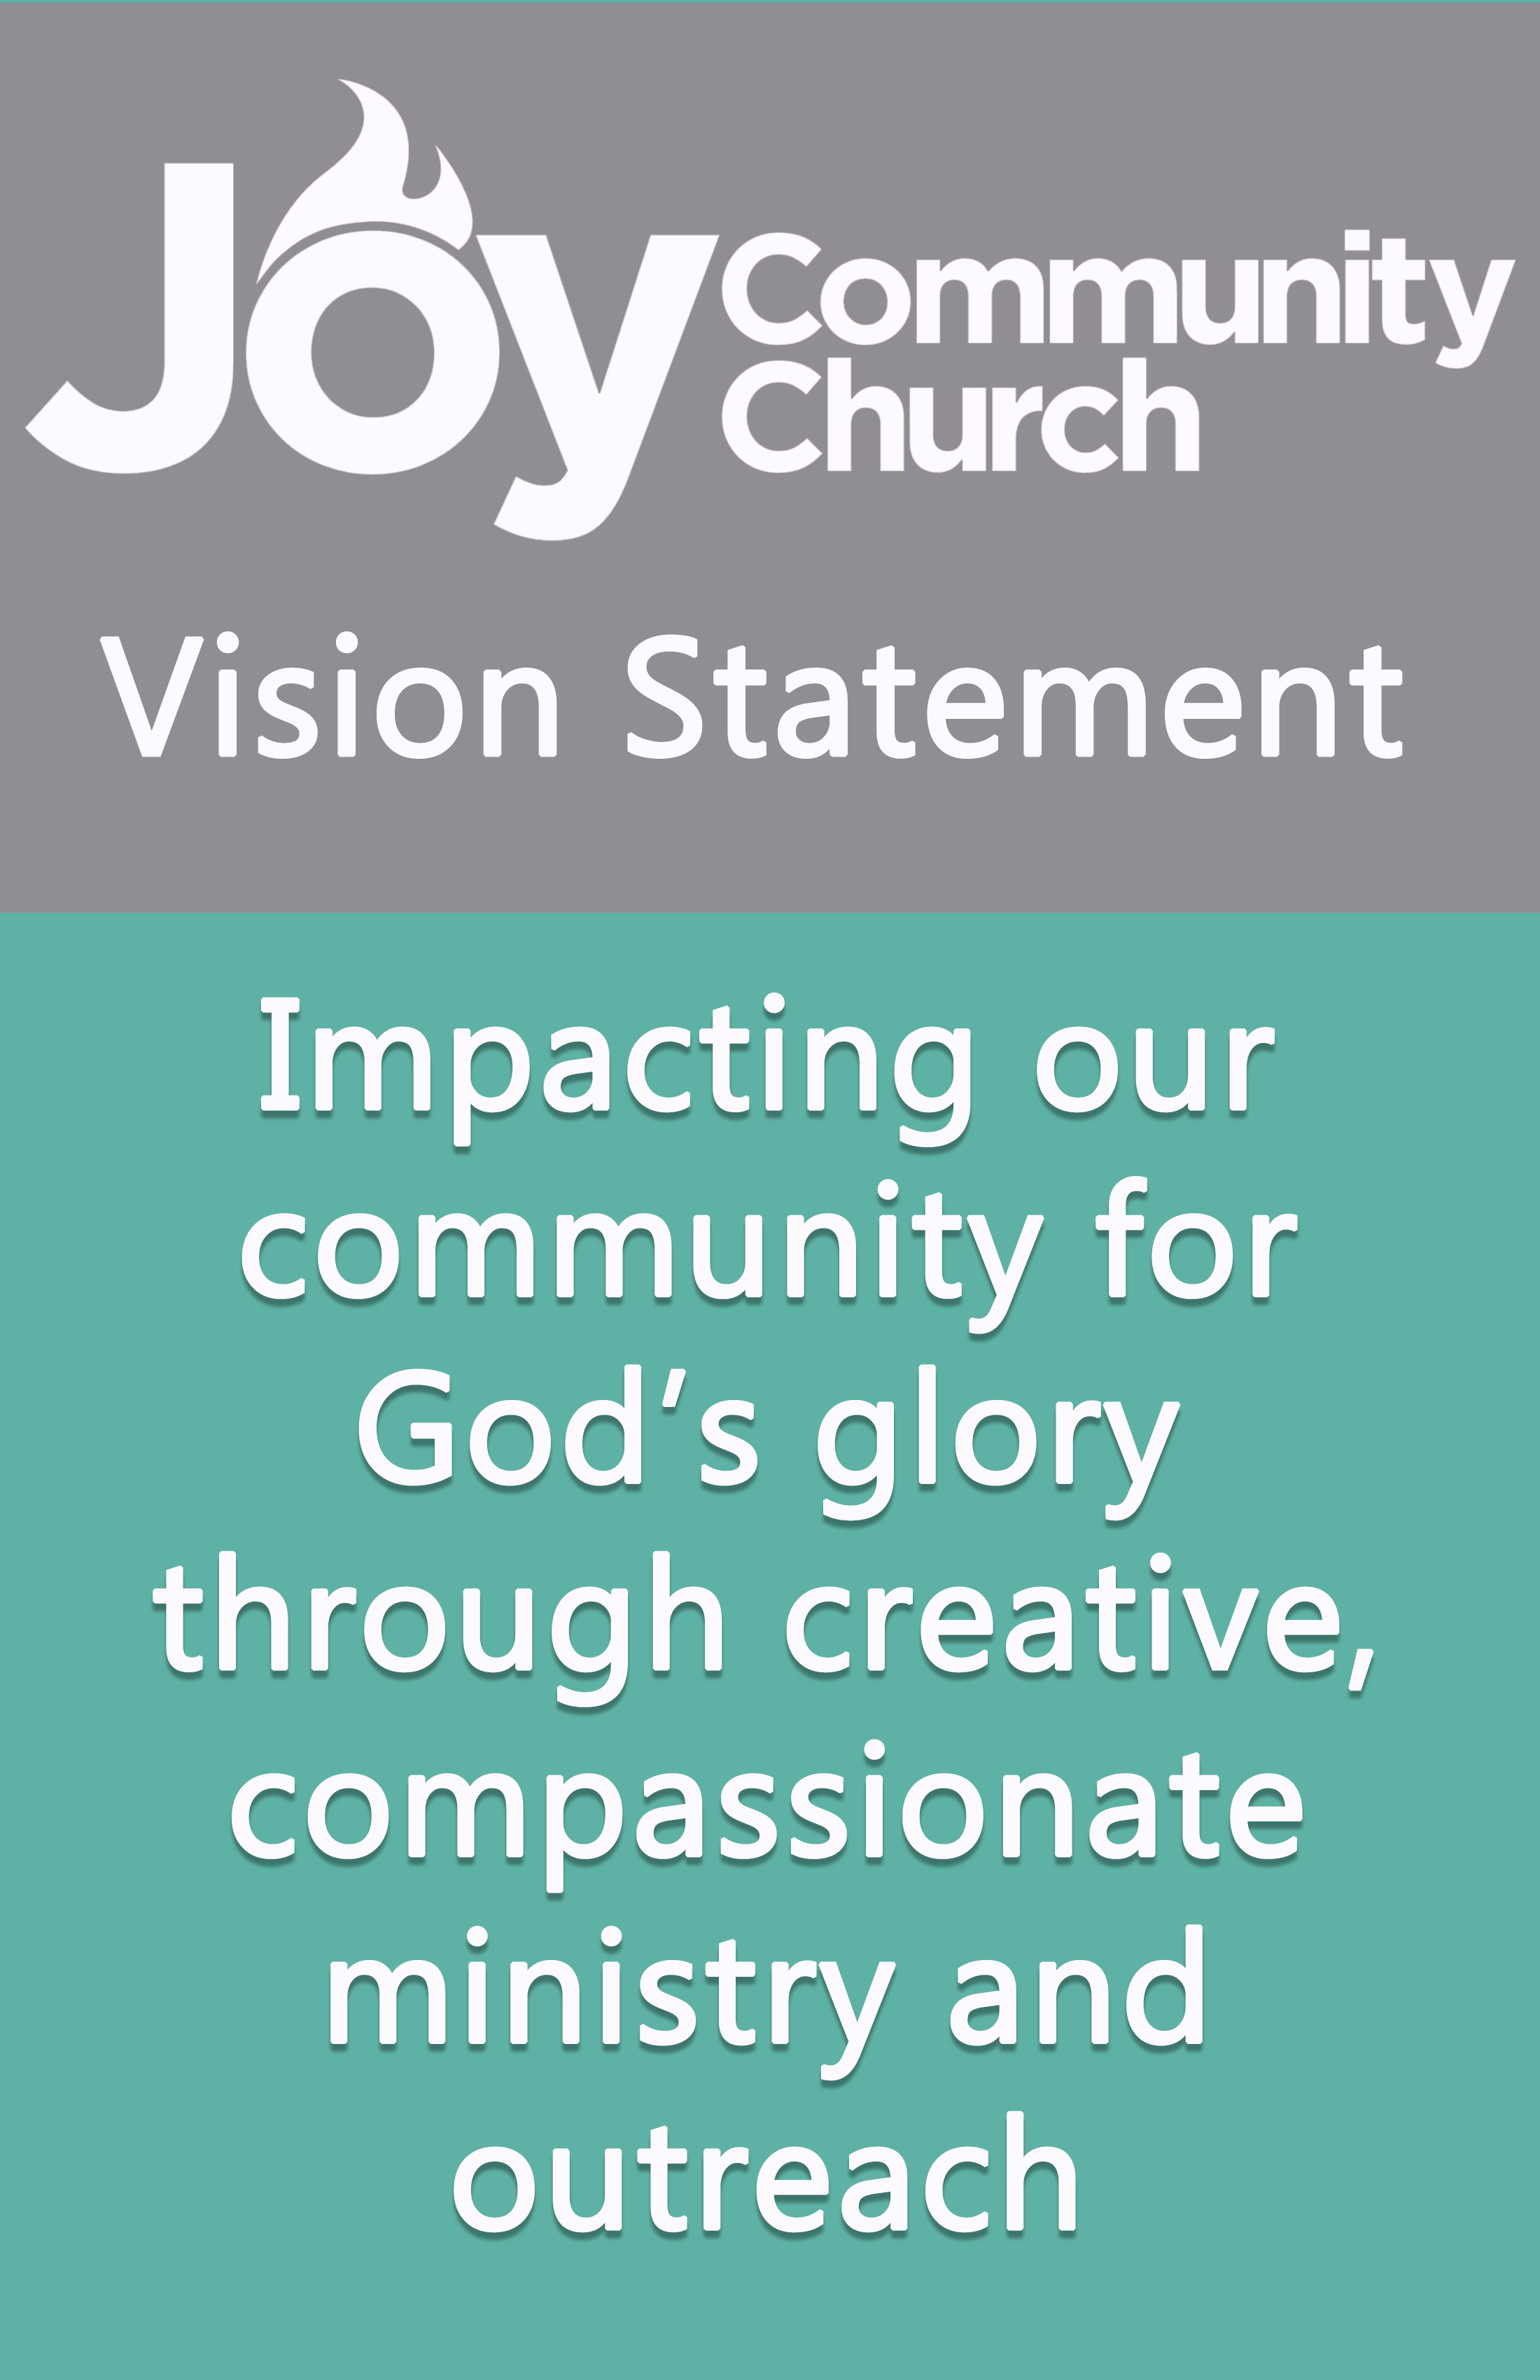 Vision Statement of JoyCC